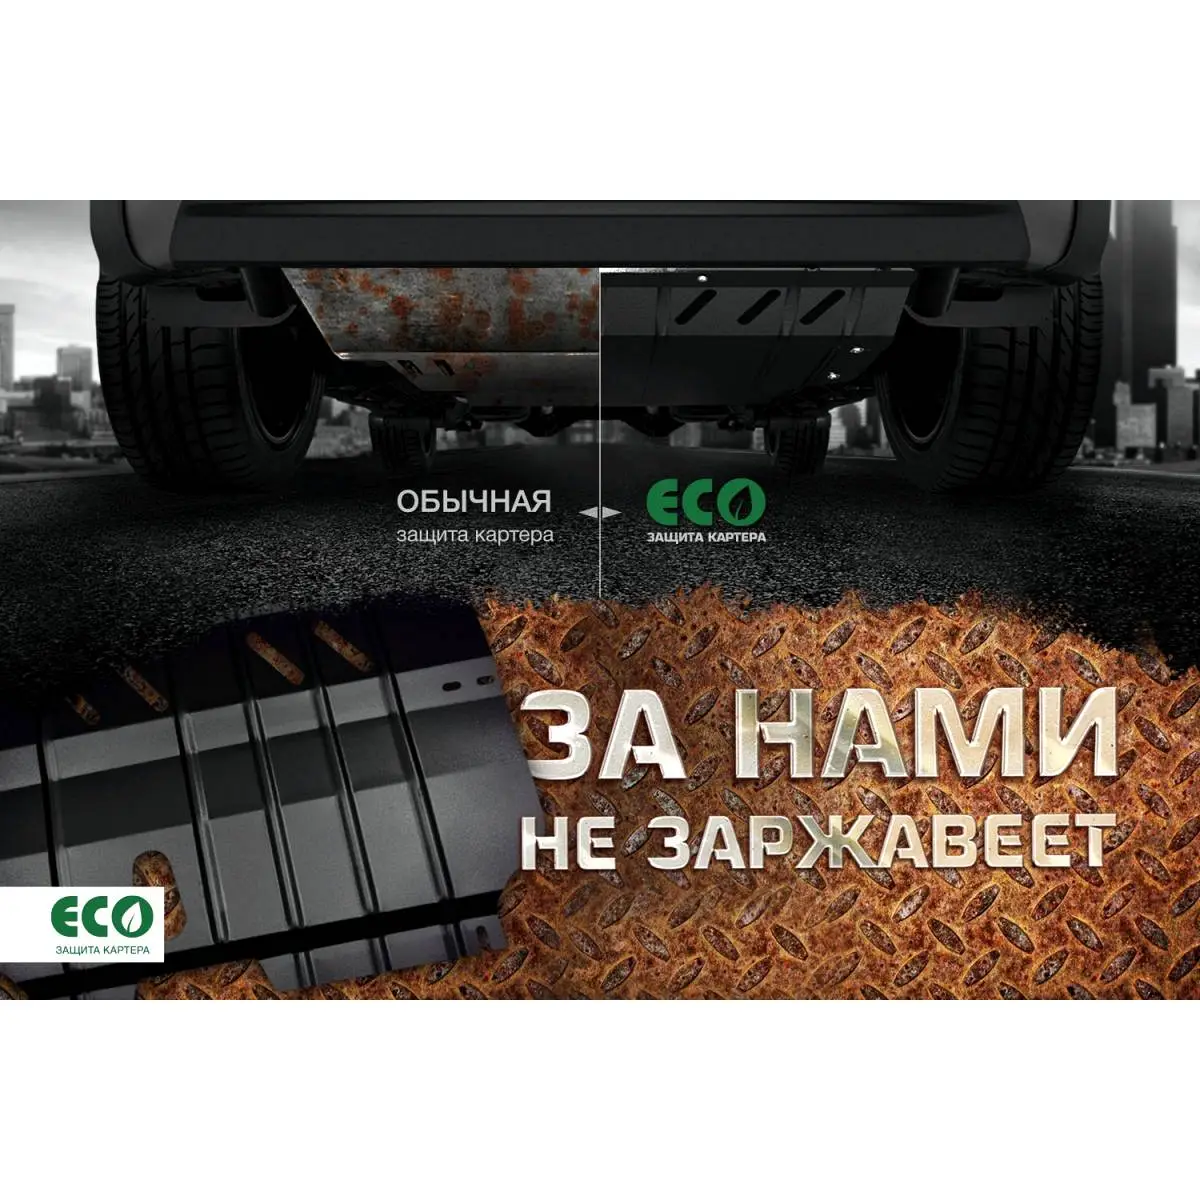 Комплект крепежа защиты картера Eco W6 K01 eco2036022 1437099127 ZA3VW изображение 5